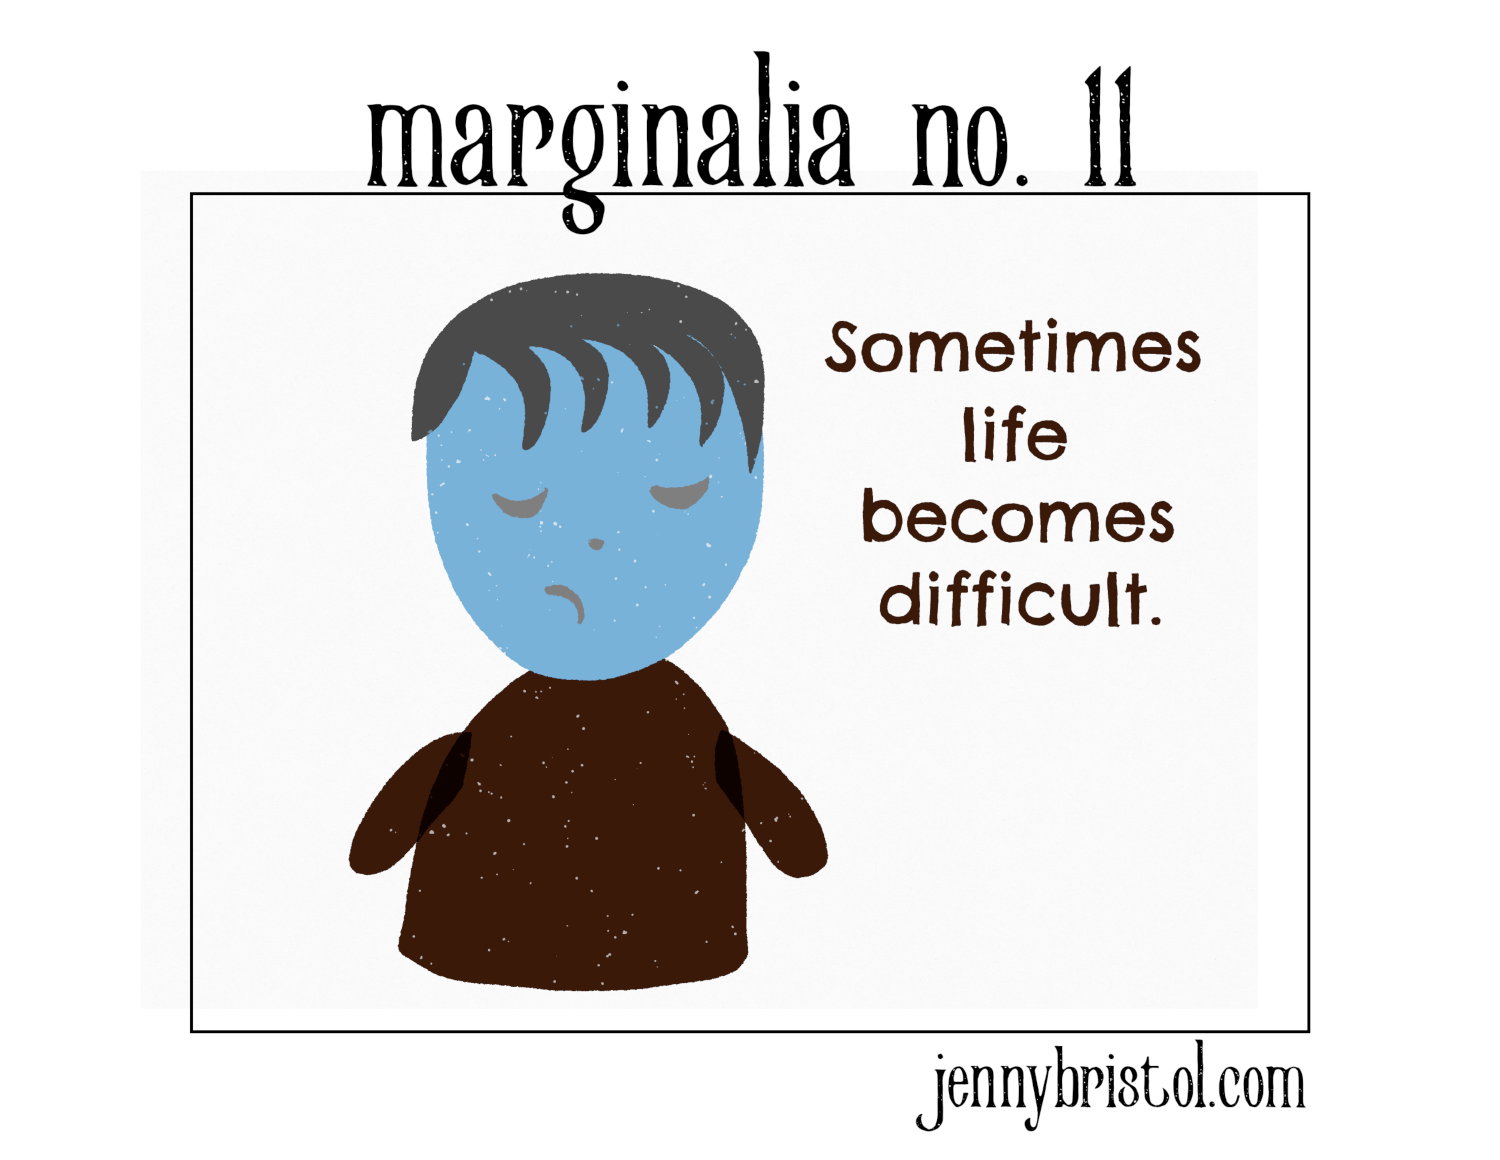 Marginalia no. 11 to post